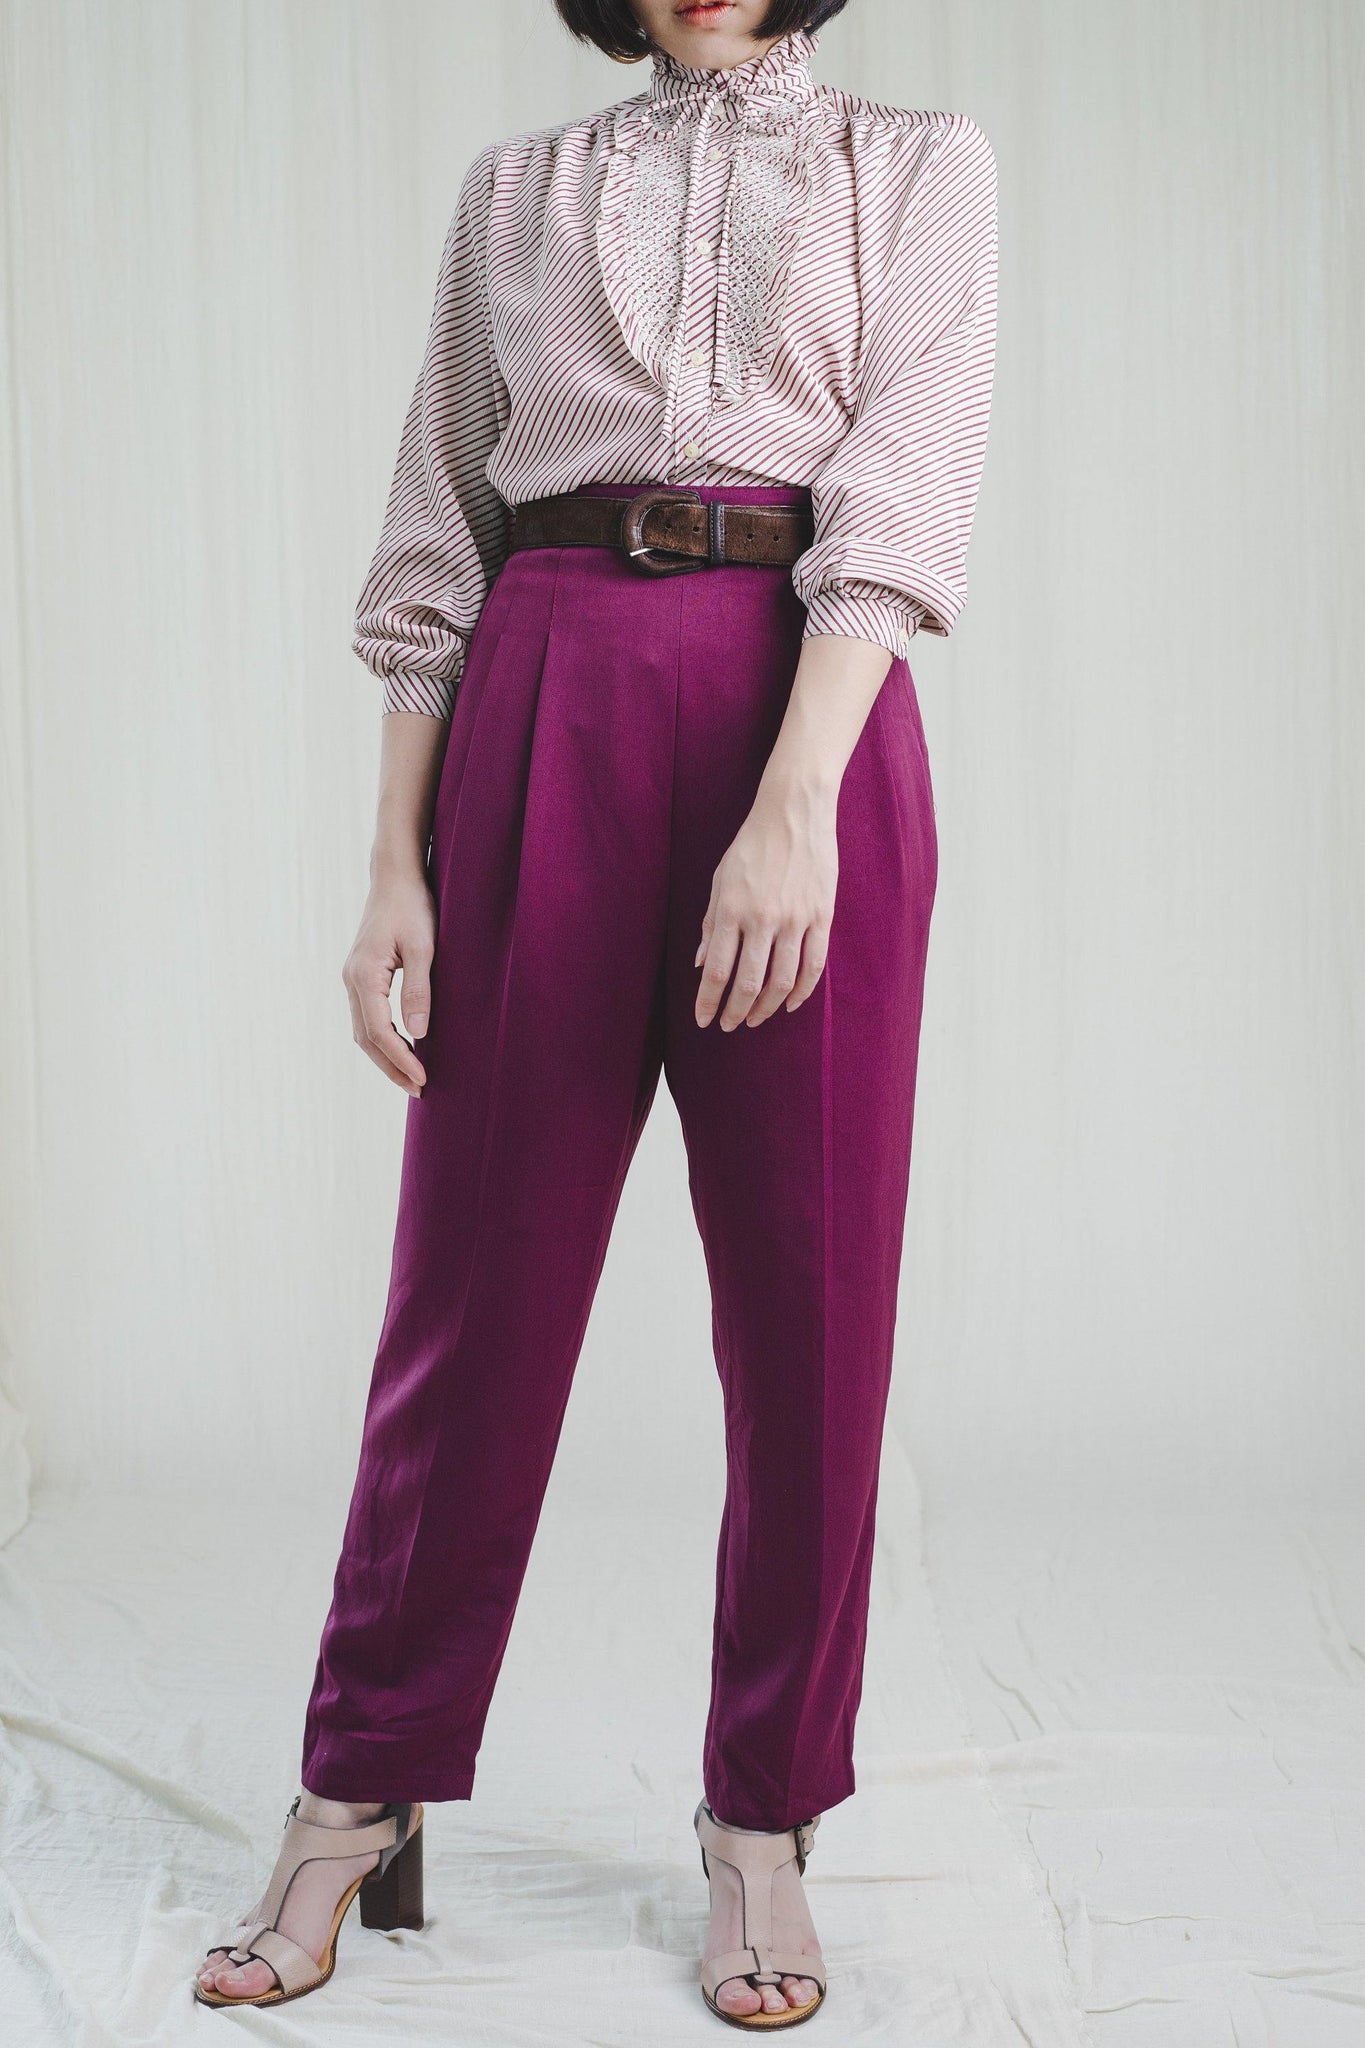 Vintage blouse | Pastel pink stripes - Sugar & Cream Vintage